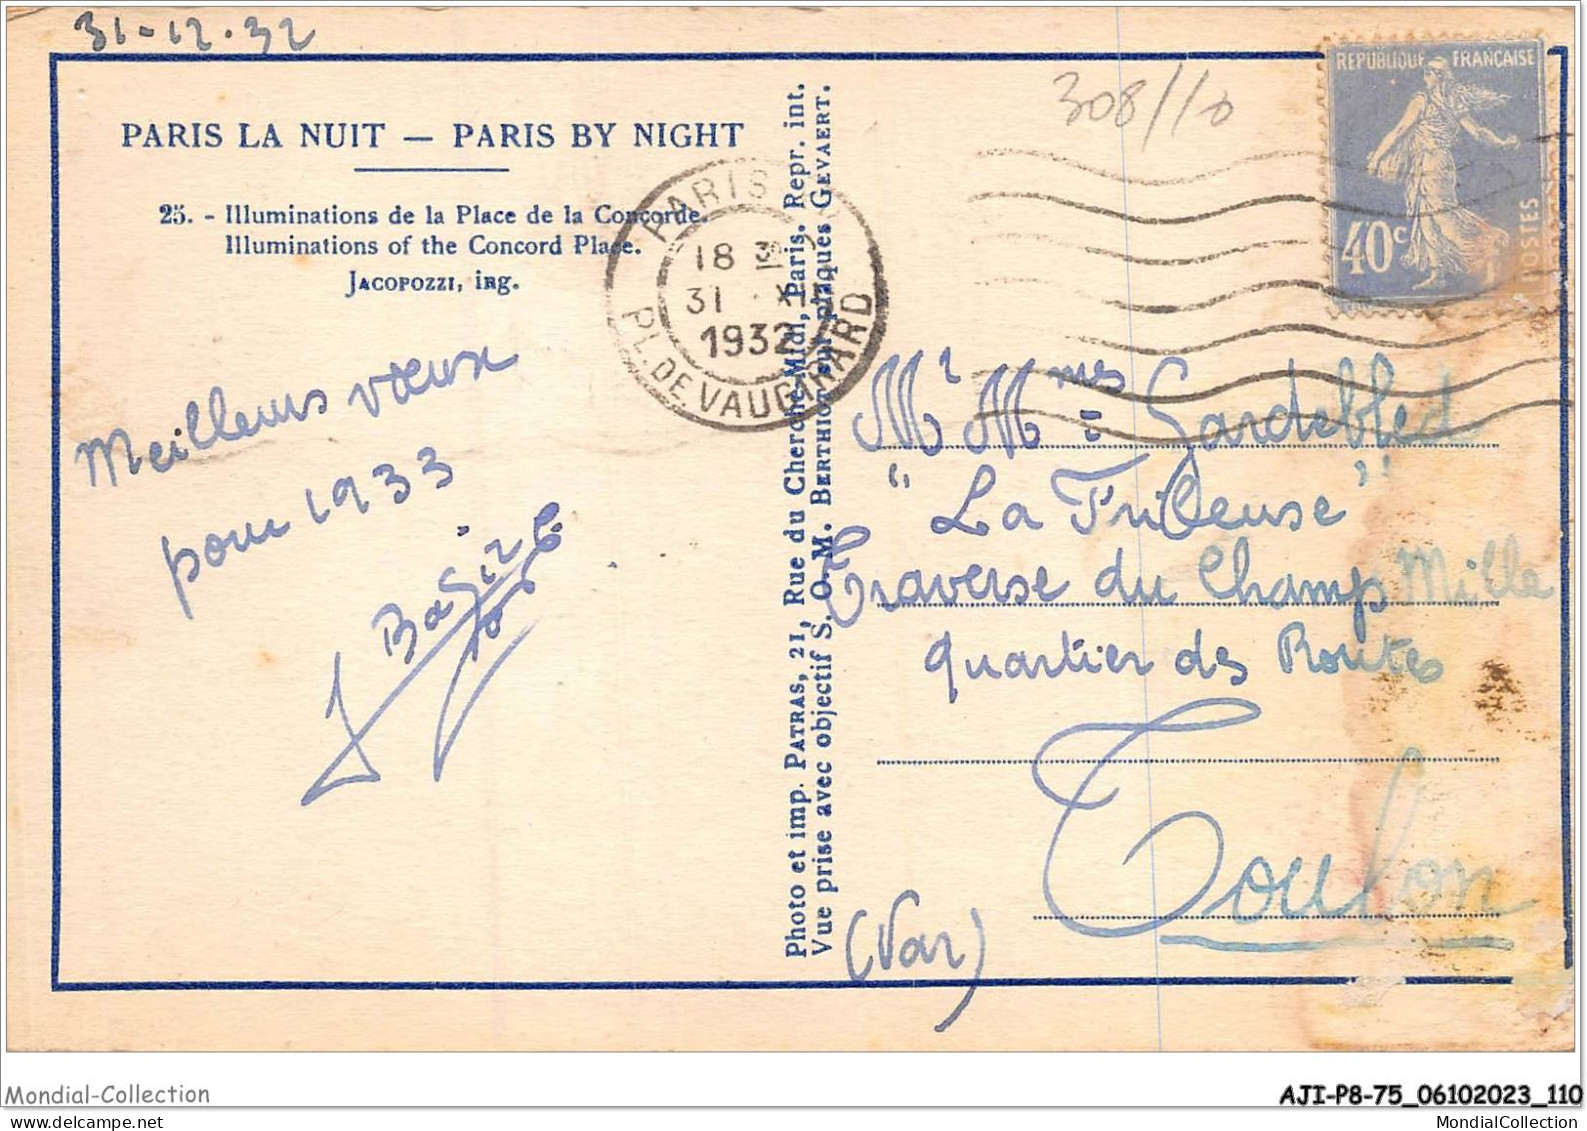 AJIP8-75-0865 - PARIS LA NUIT - Illuminations De La Place De La Concorde - Paris By Night